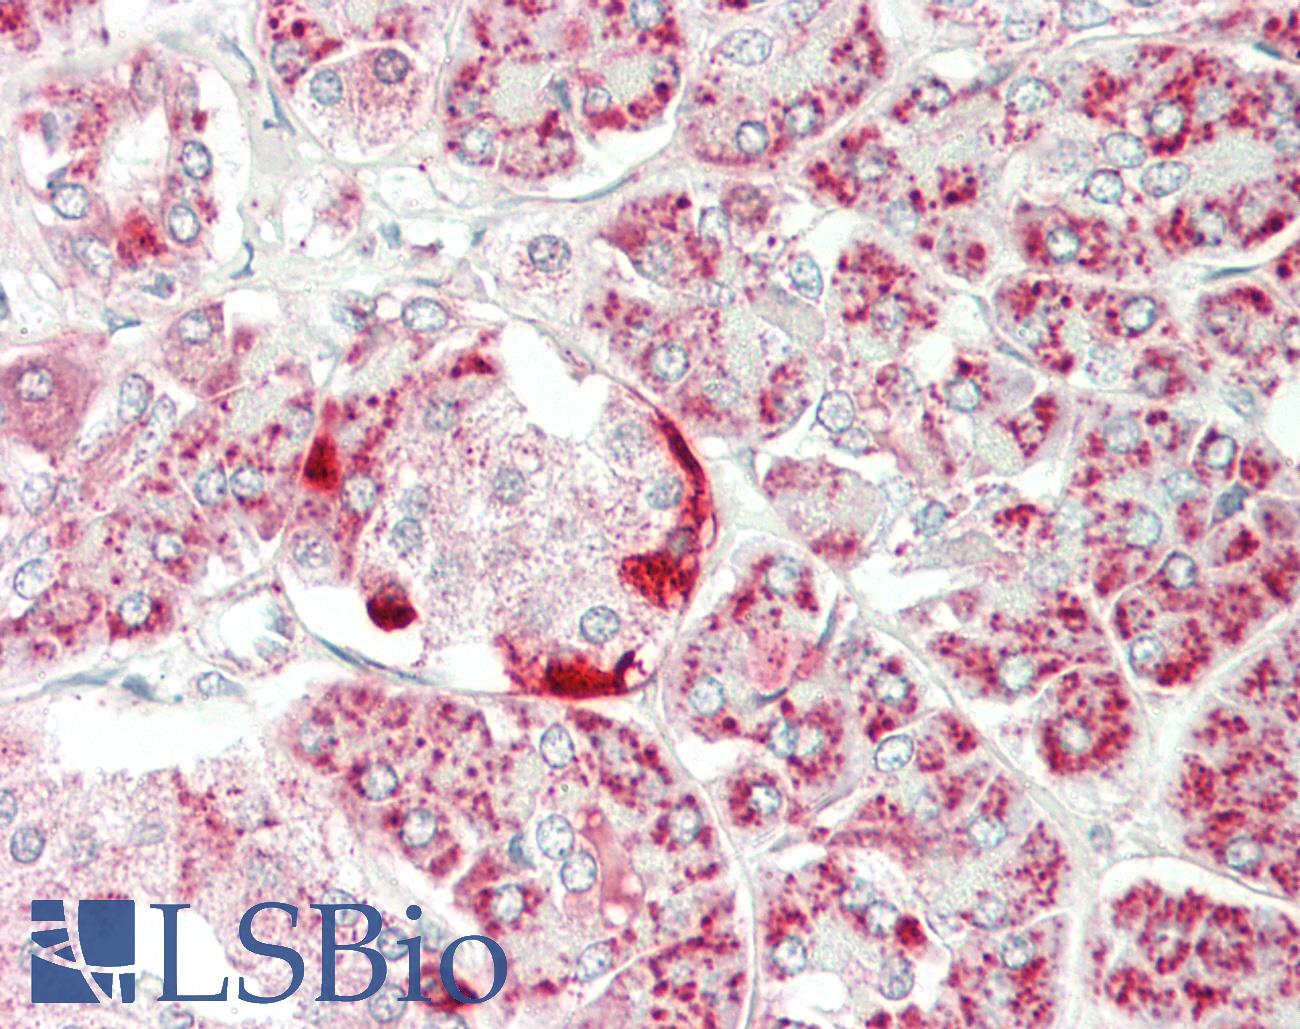 CLPP Antibody - Human Pancreas: Formalin-Fixed, Paraffin-Embedded (FFPE)